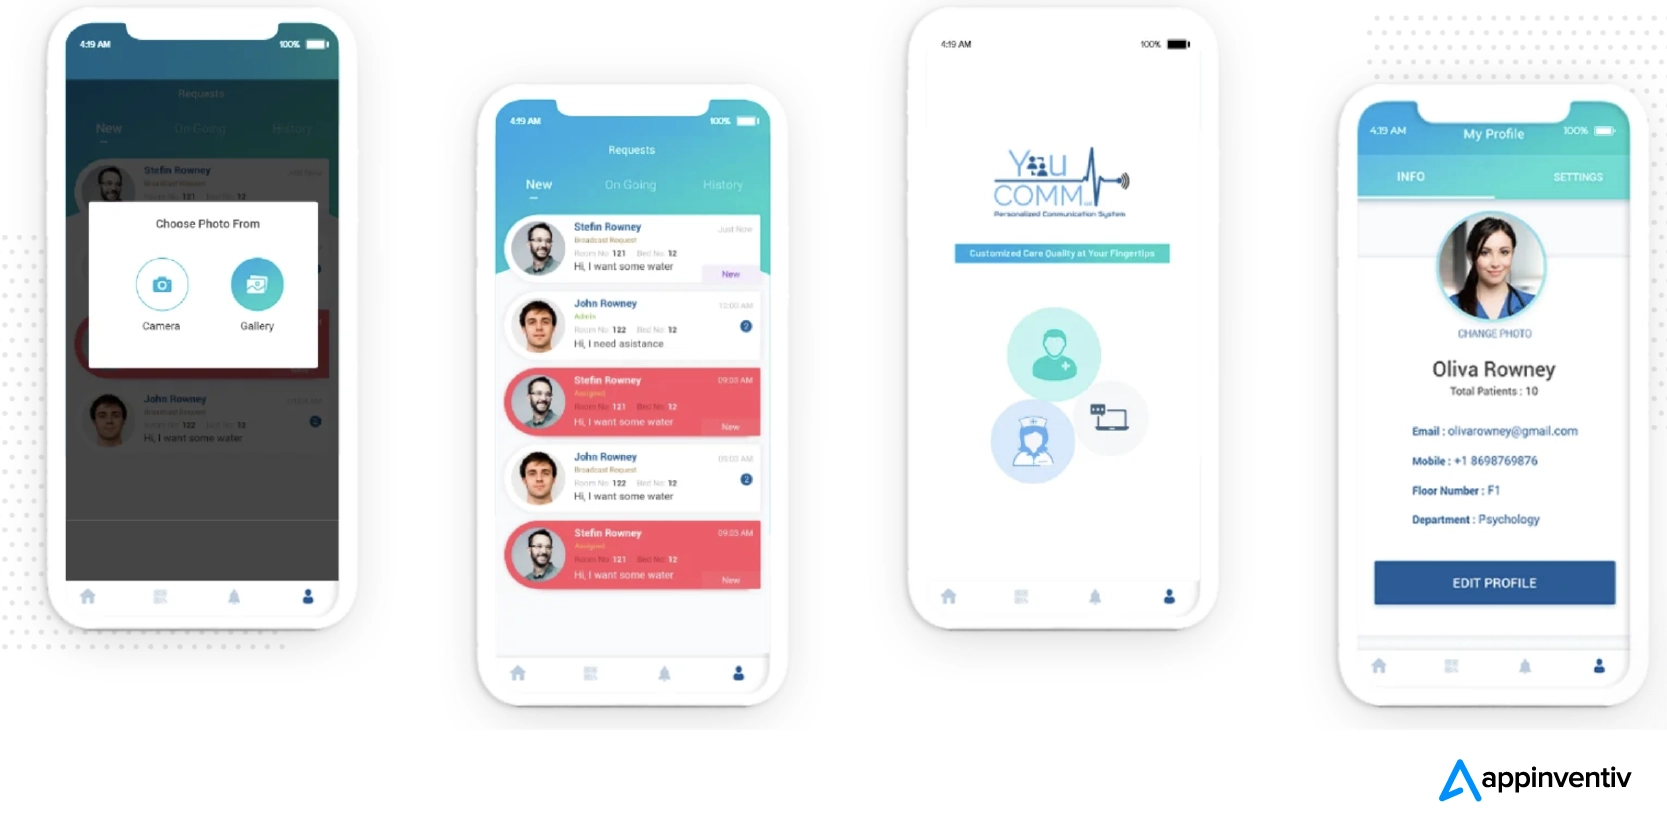 YouCOMM in-hospital patient communication platform